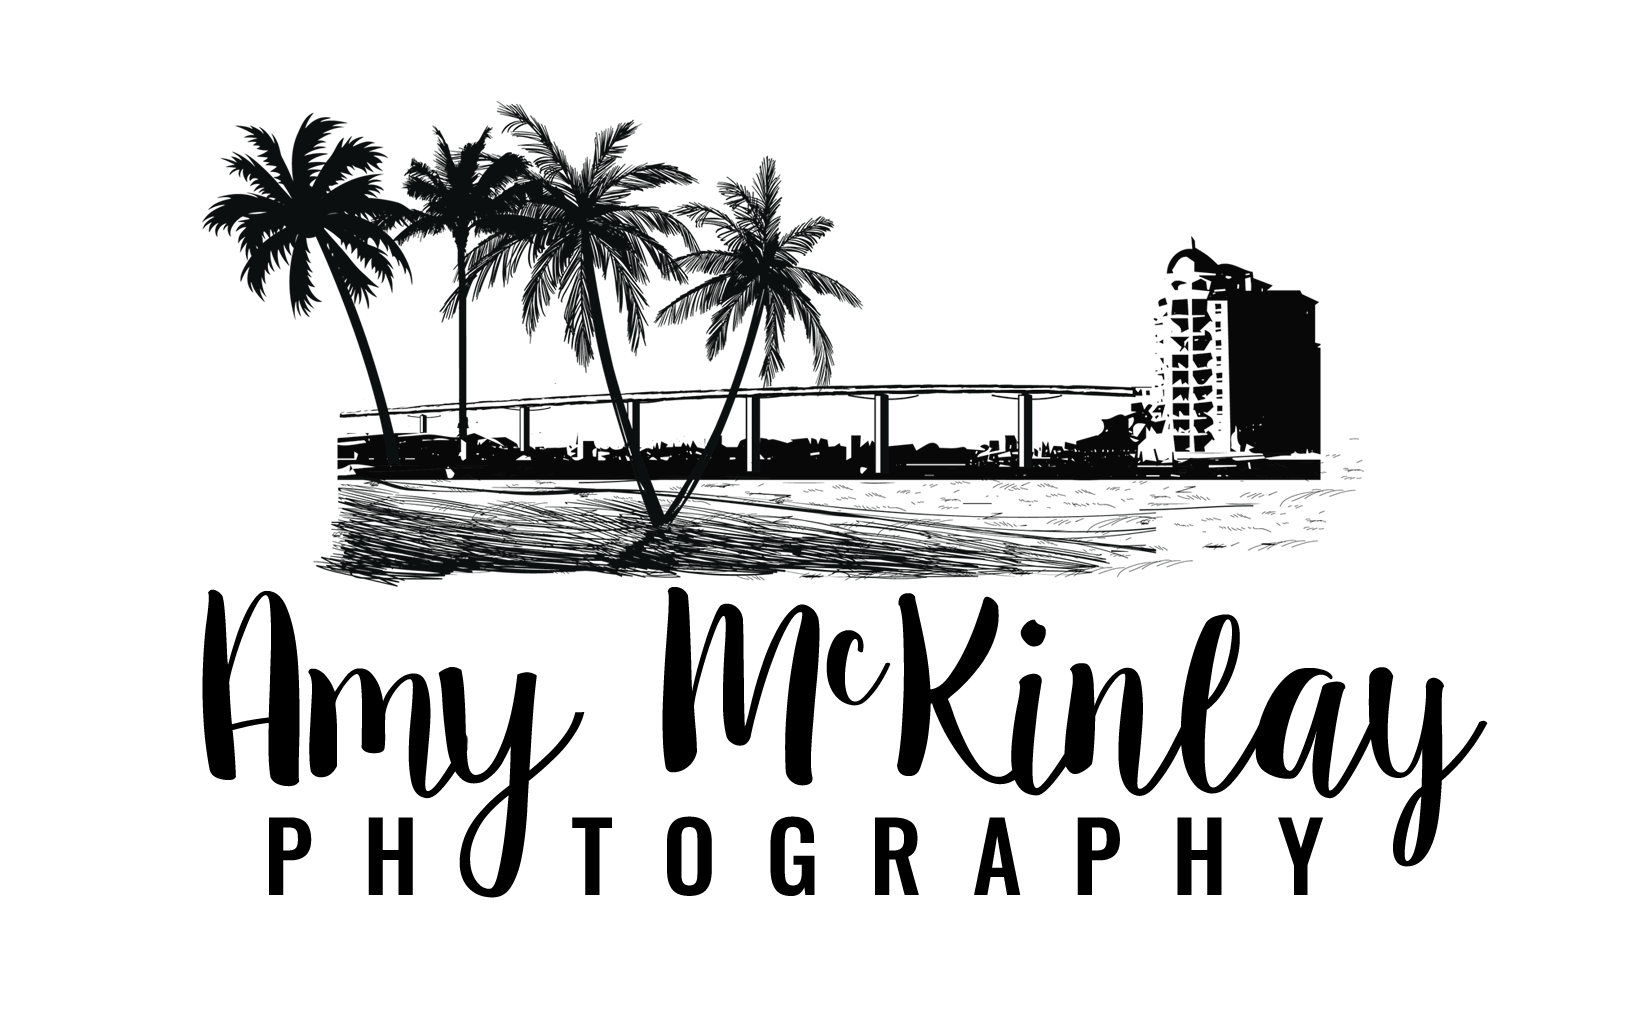 Amy McKinlay Photography